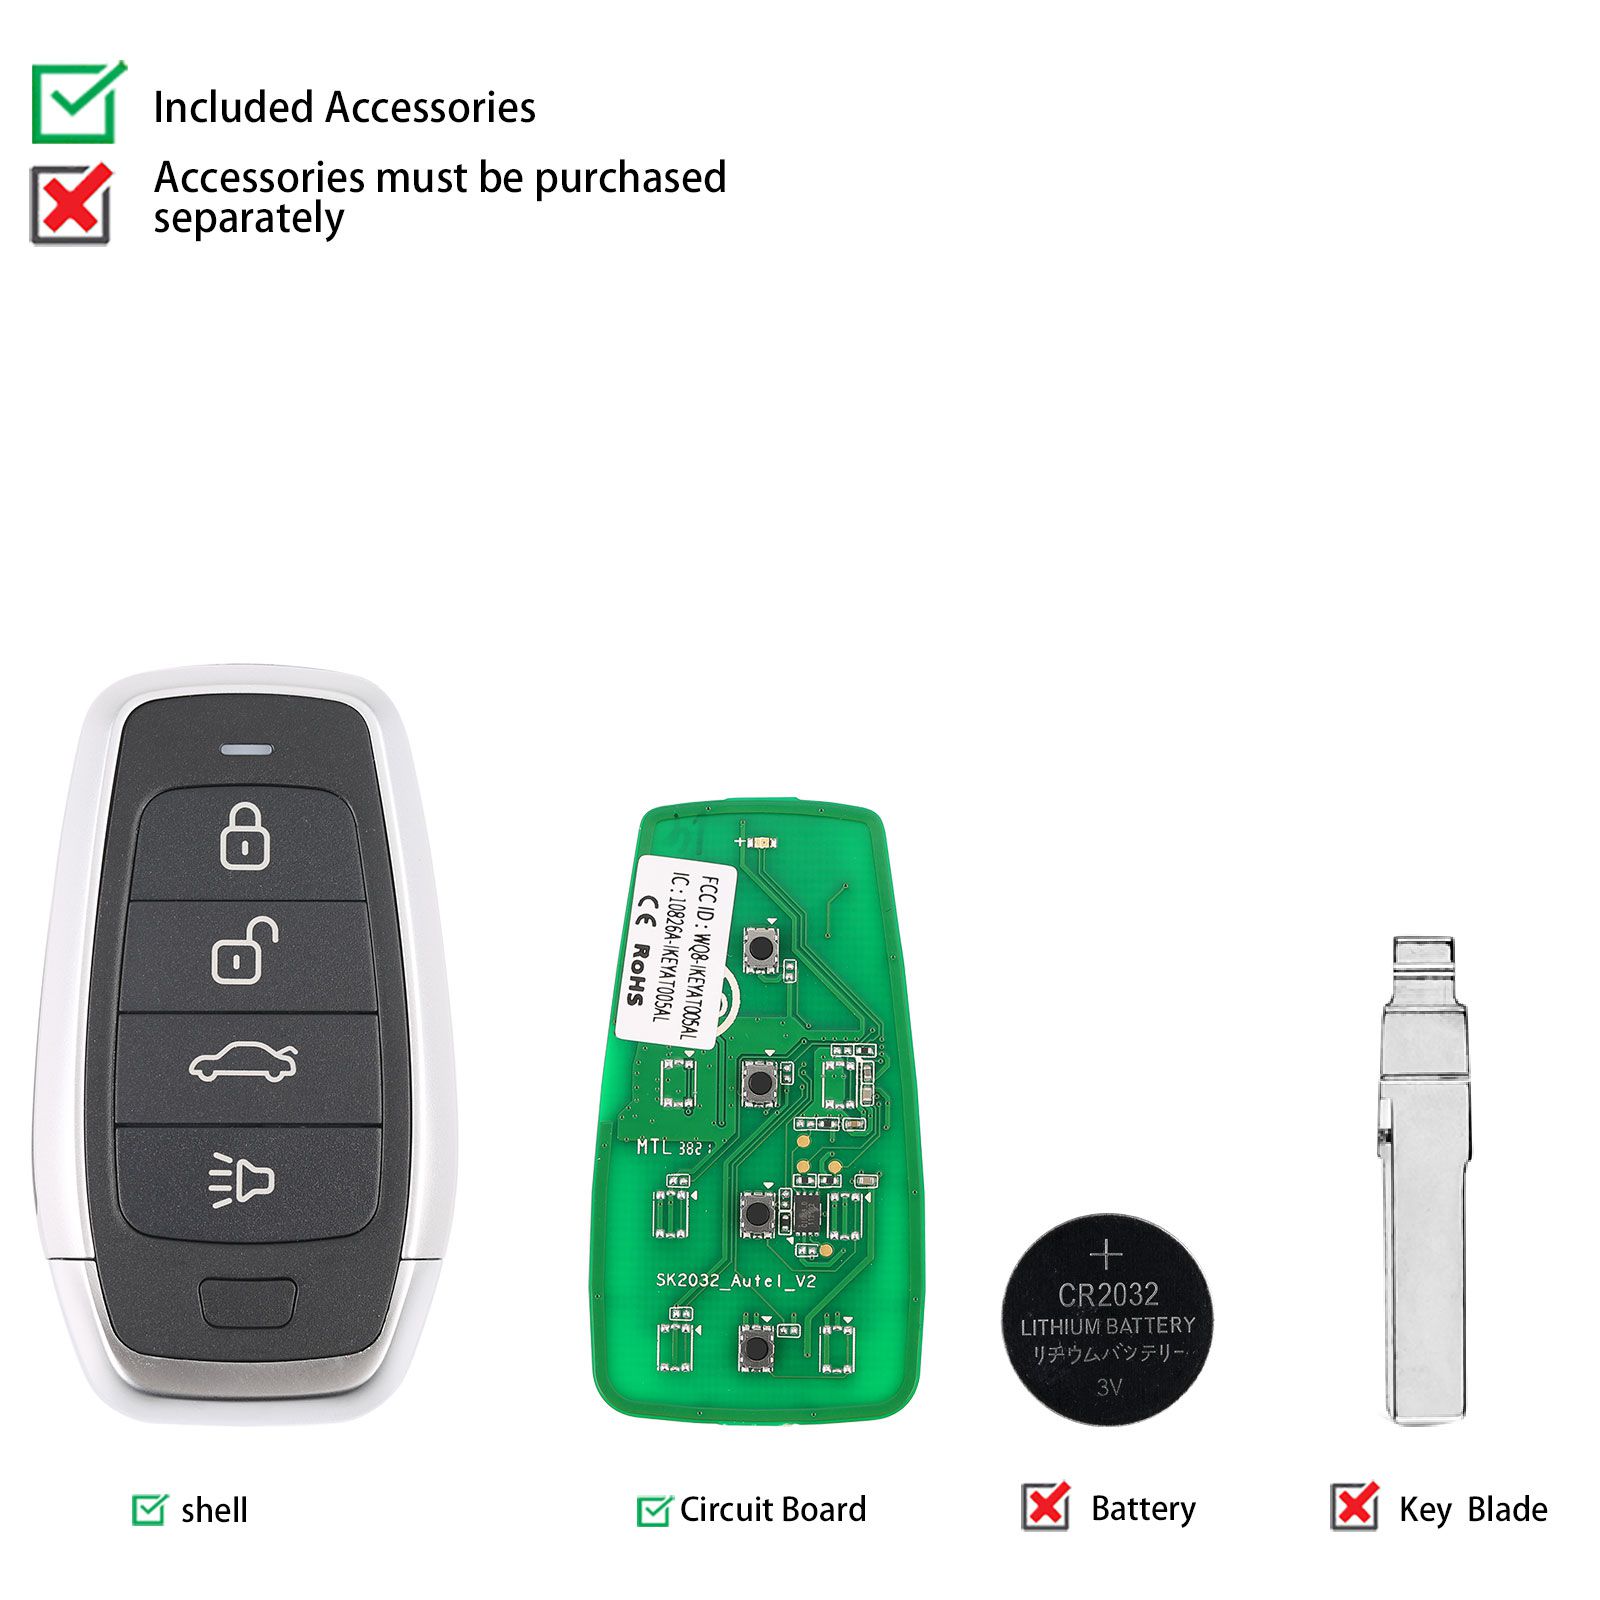 AUTEL IKEYAT004CL 4 Buttons Independent Universal Smart Key 5pcs/lot